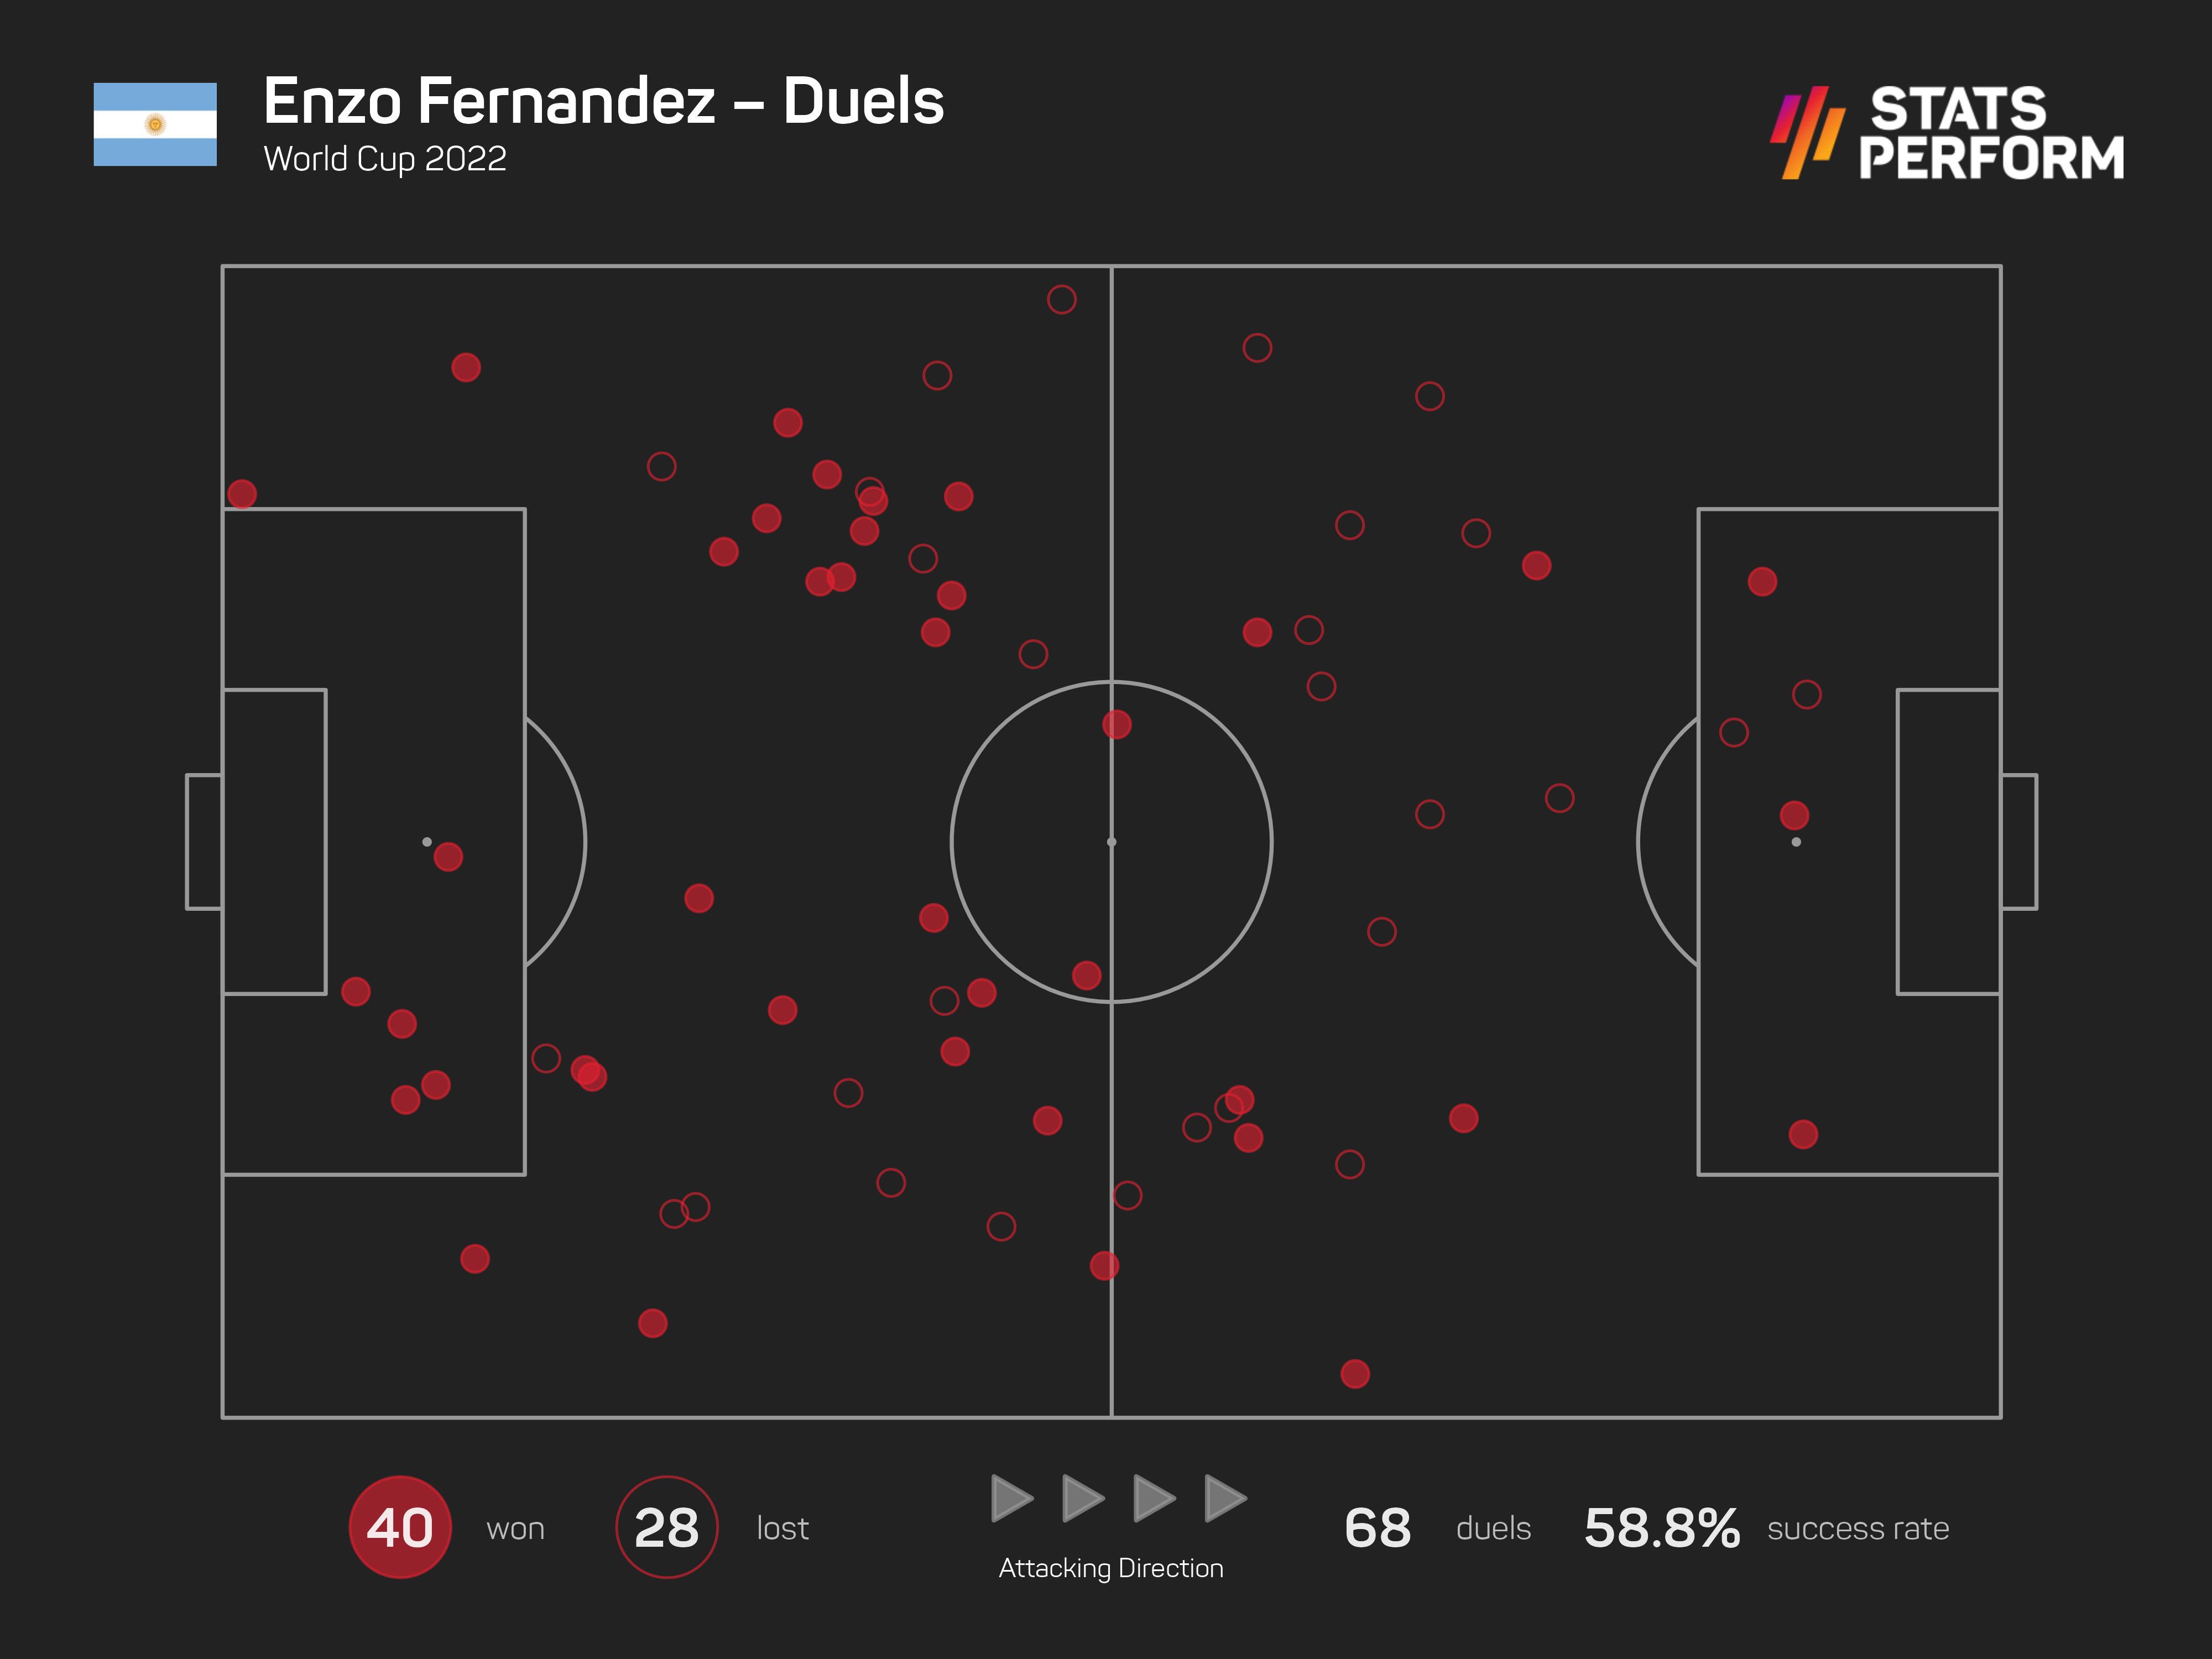 Enzo Fernandez was a key cog in Argentina's midfield